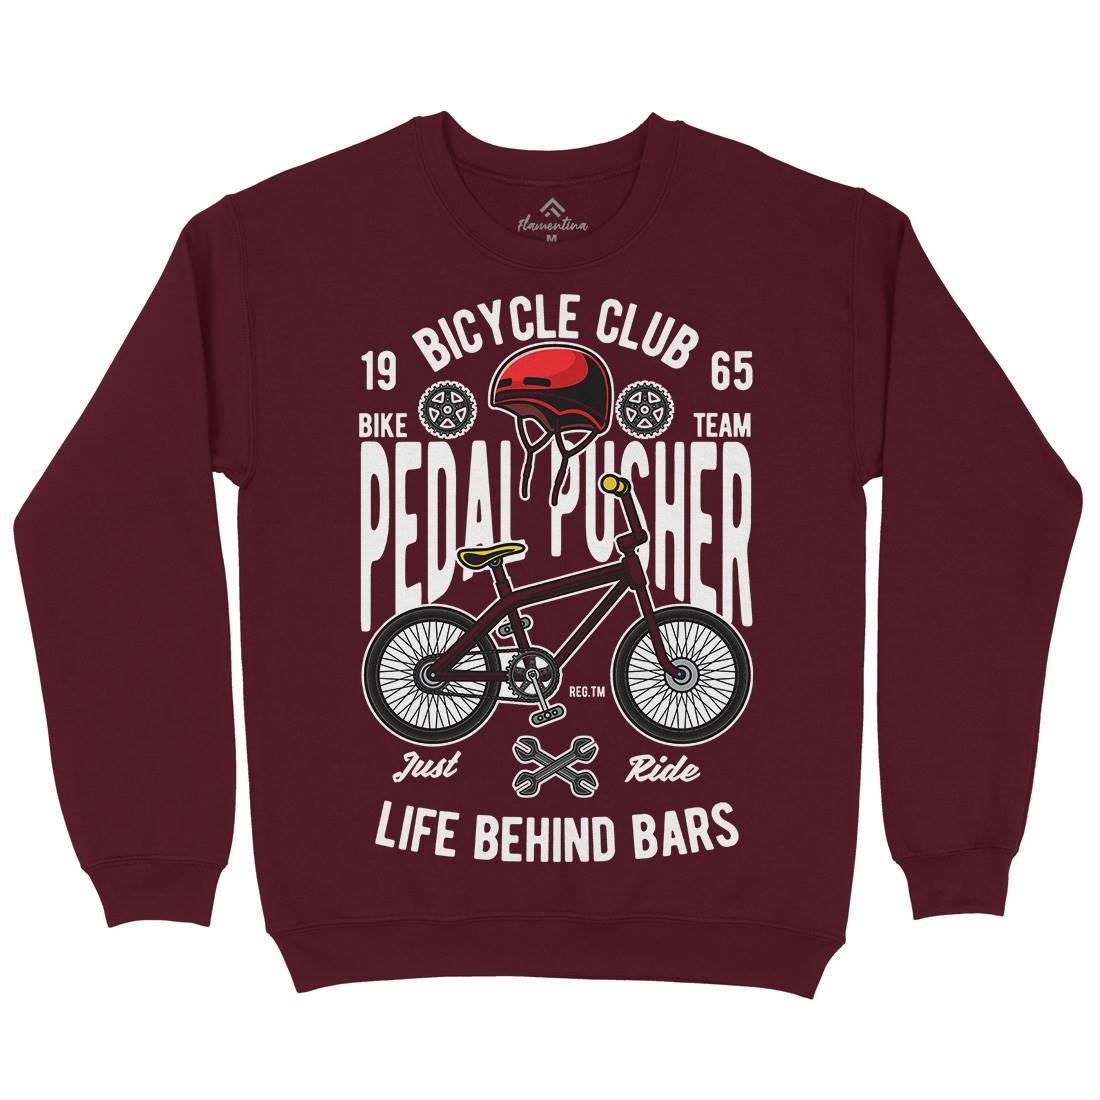 Pedal Pusher Kids Crew Neck Sweatshirt Bikes C411